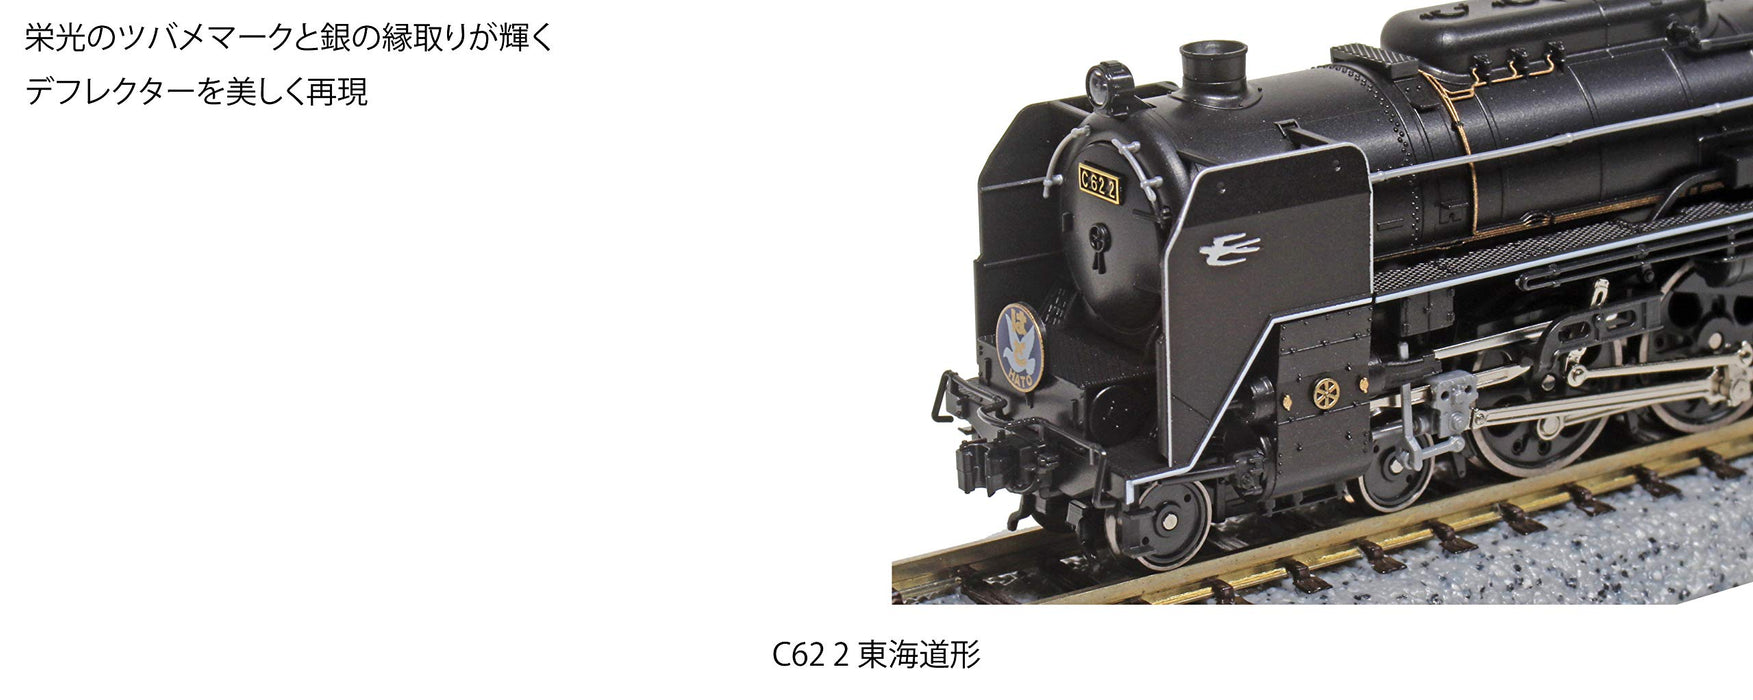 Kato Black Steam Locomotive N Gauge C62-2 Tokaido Type 2017-8 Railway Model